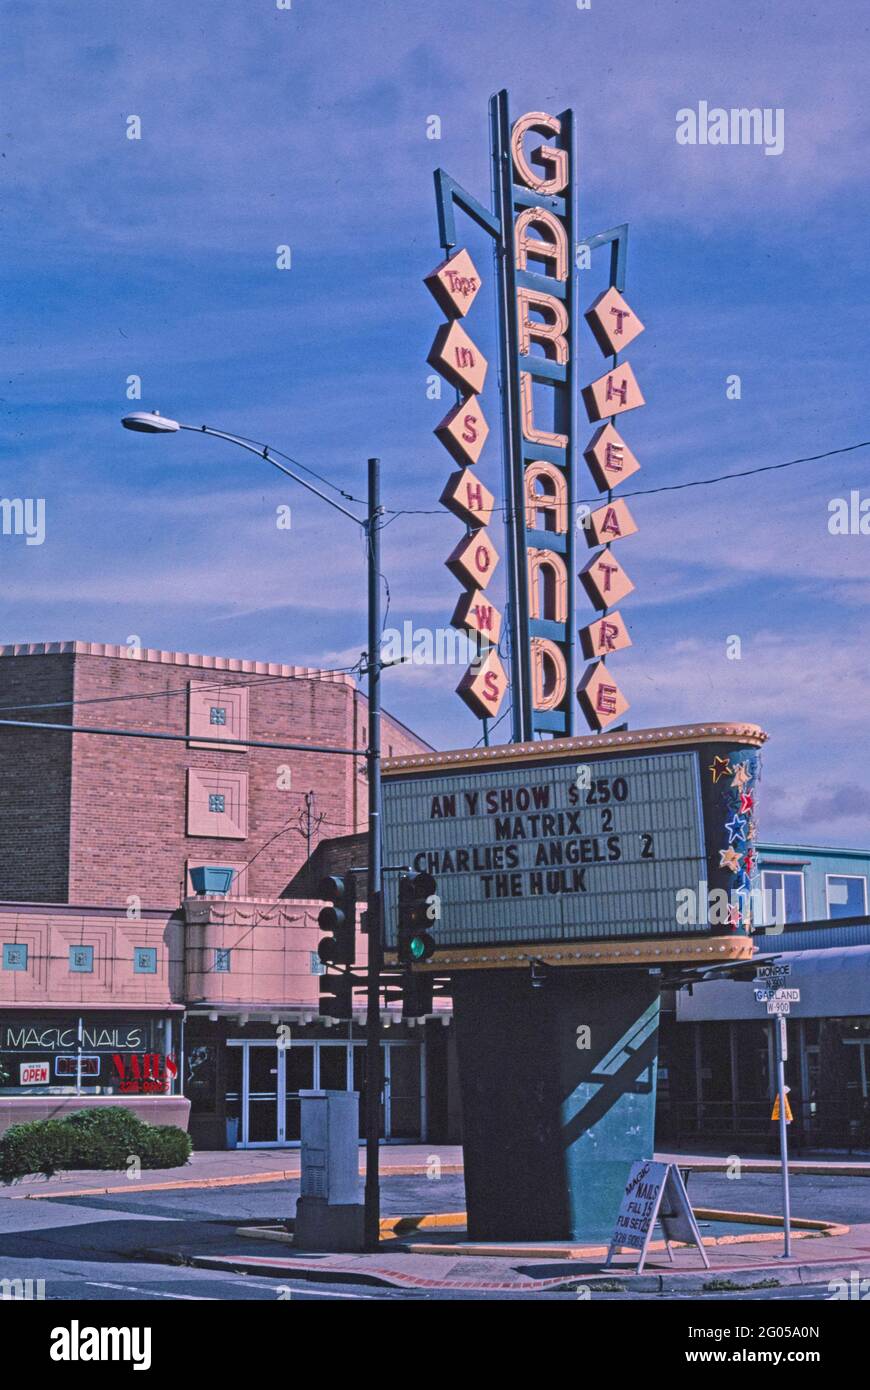 2000s America - Garland Theater, Spokane, Washington 2003 Stock Photo -  Alamy